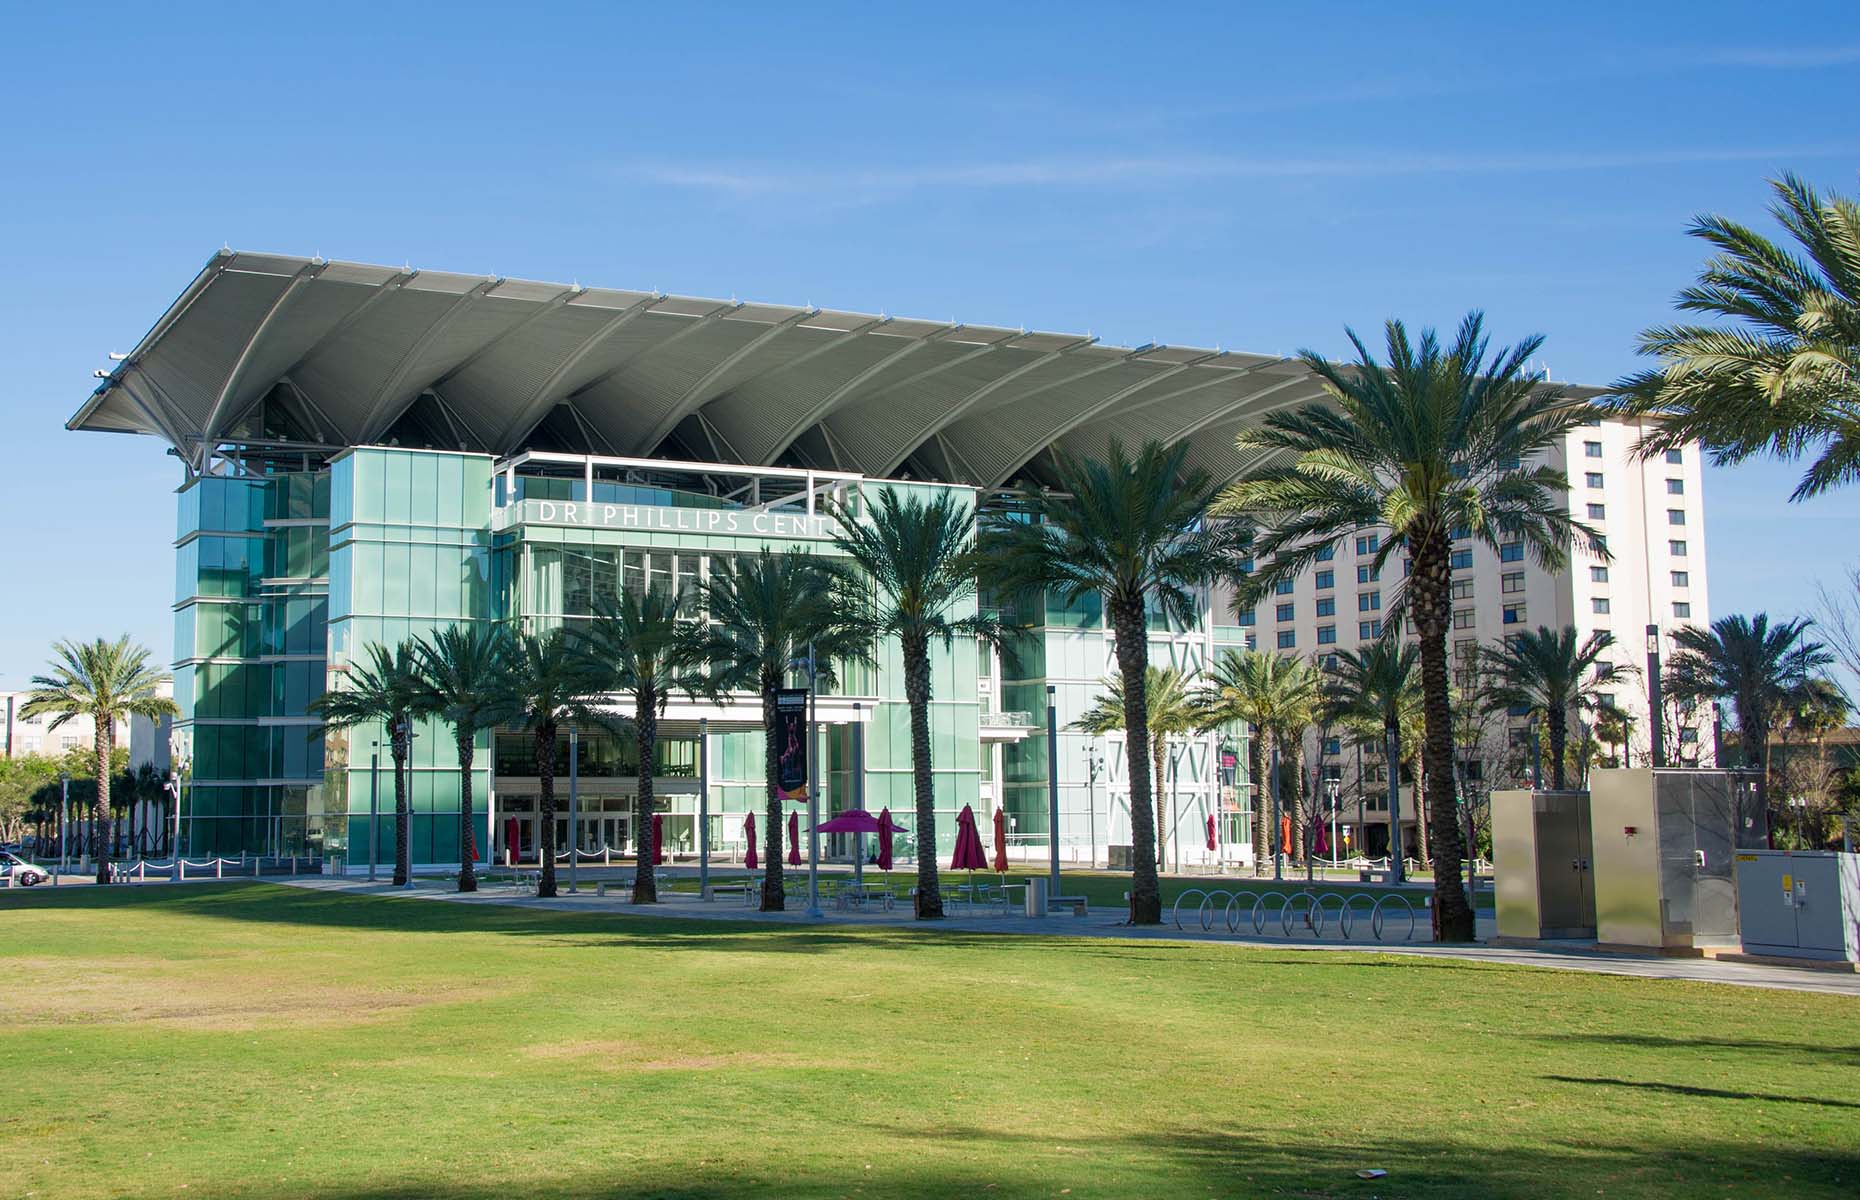 Dr. Phillips Center for the Performing Arts in Orlando (Image: Matthew Kaiser 7/Shutterstock)